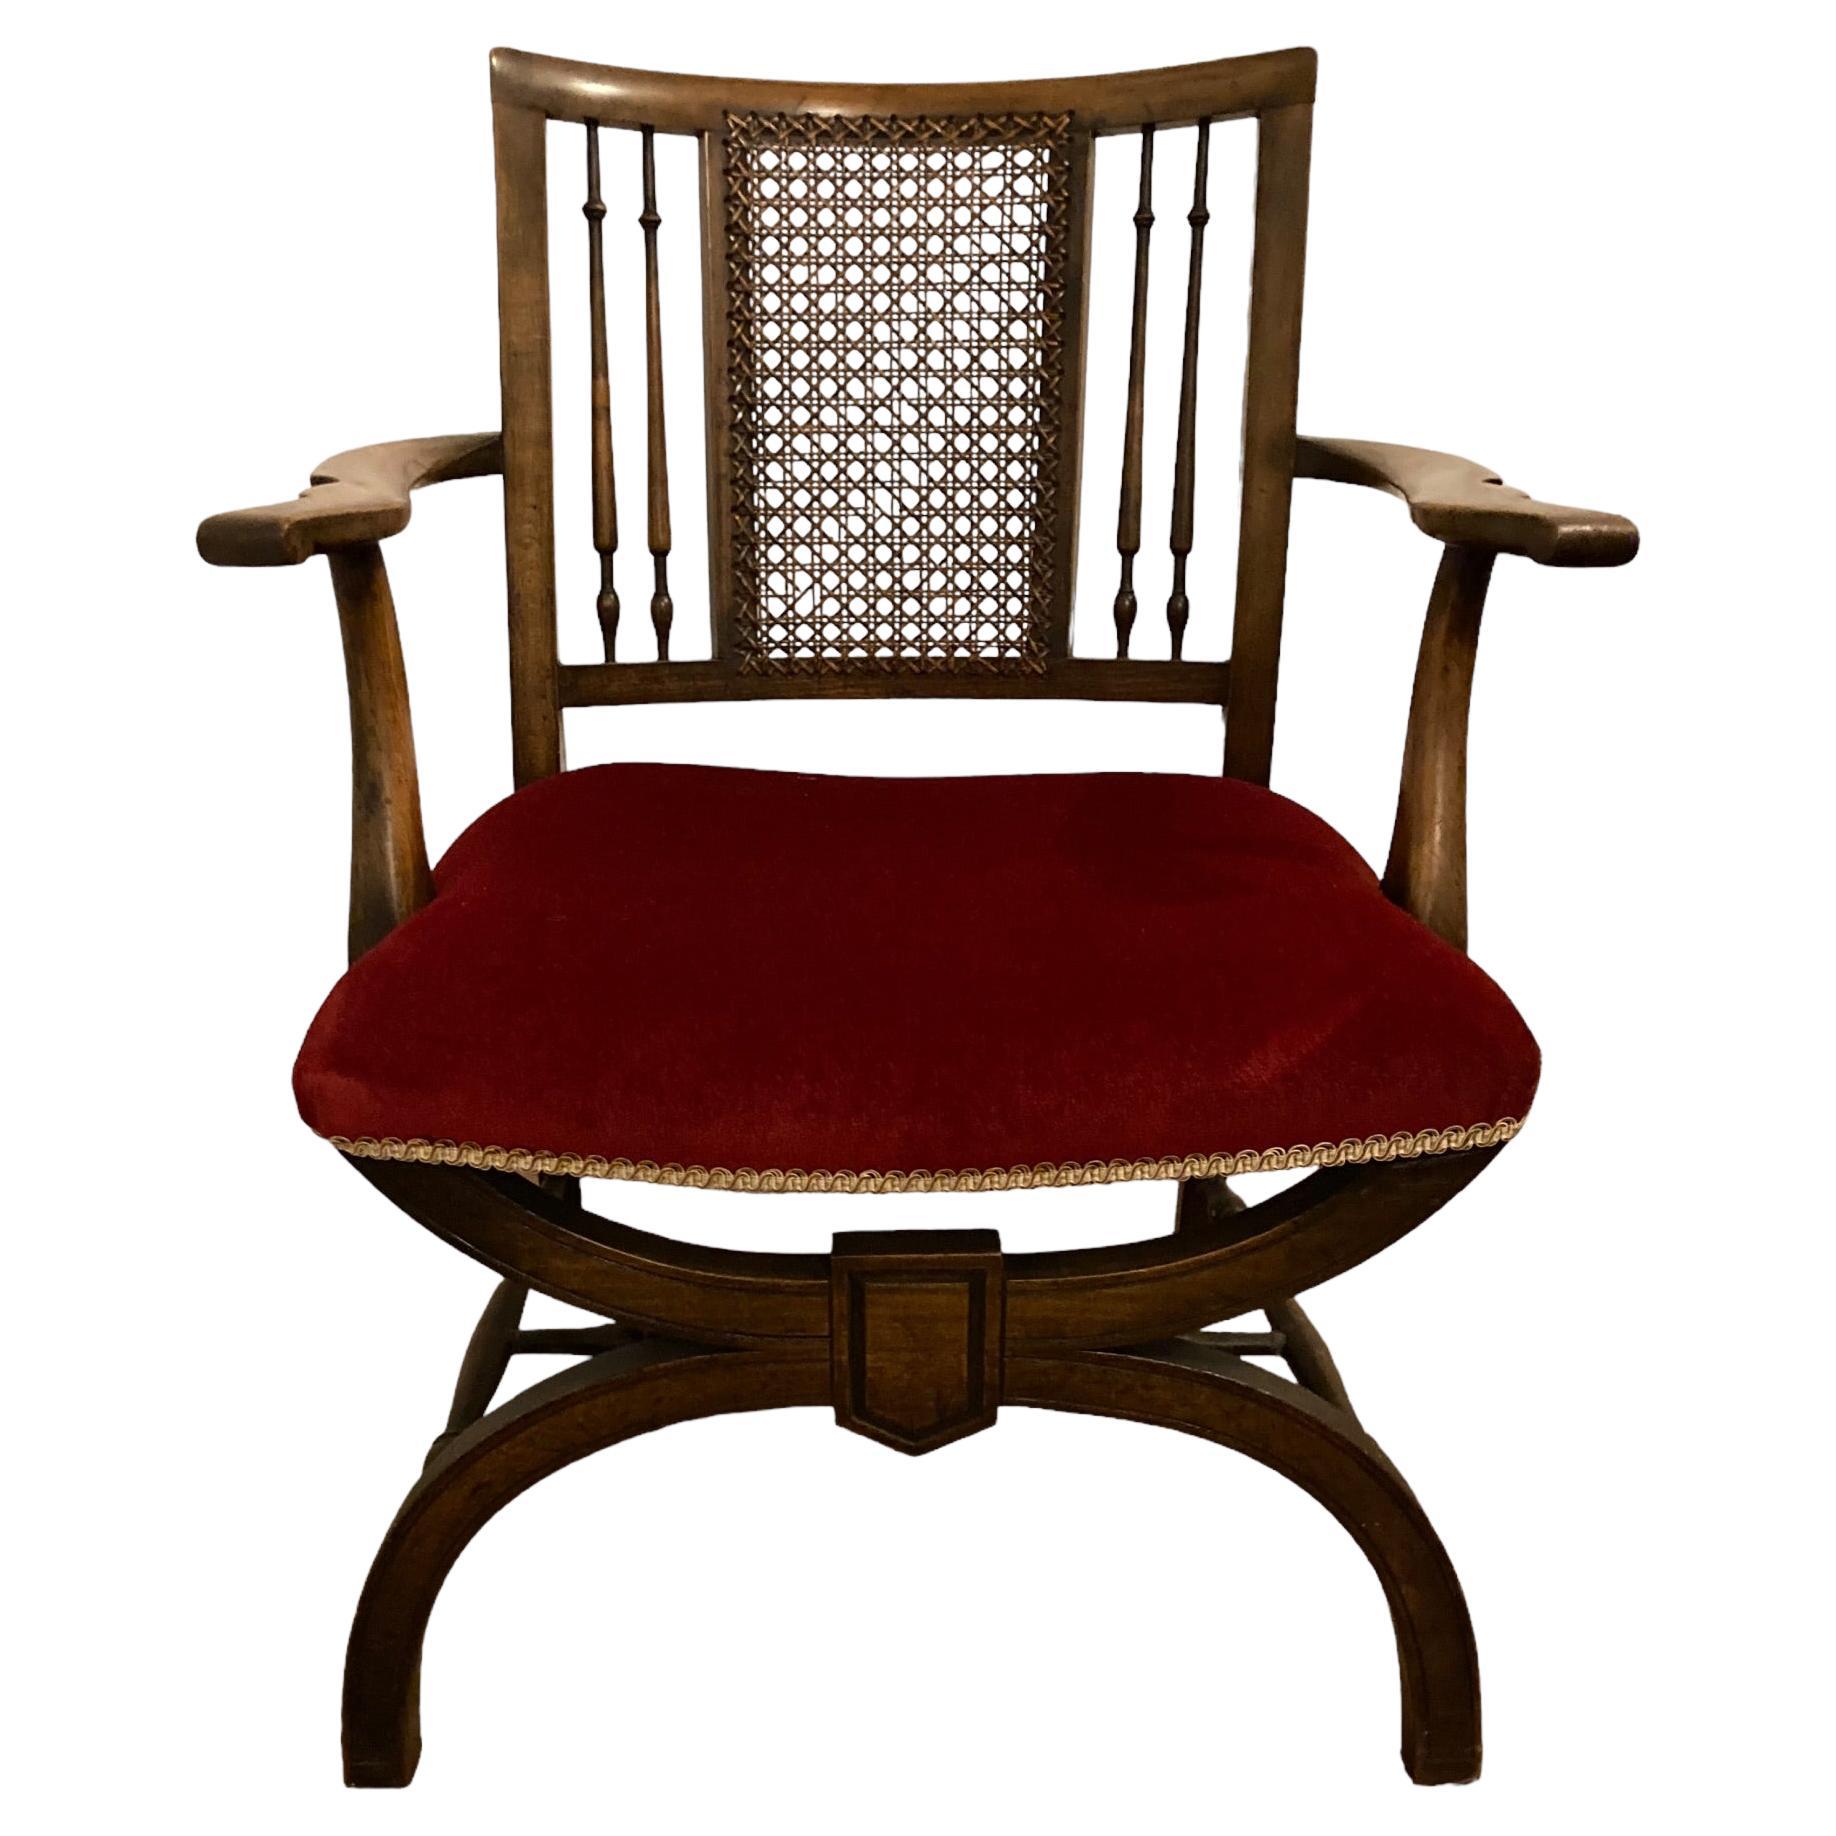 Rare fauteuil ancien en bois de Beeche avec cadre en X.